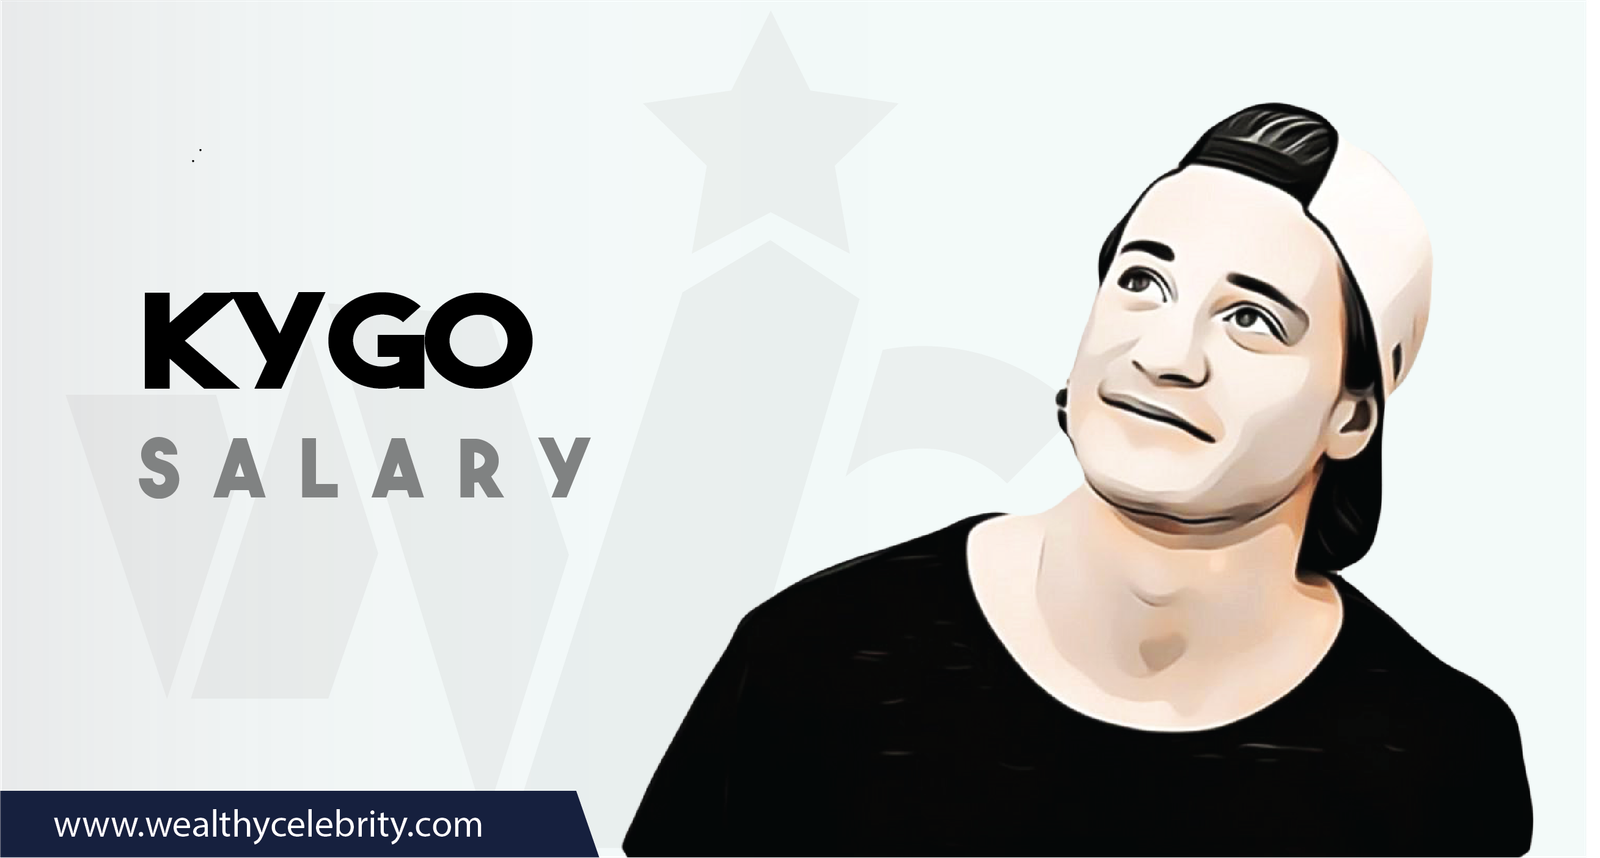 Kygo DJ - Current Salary Net Worth